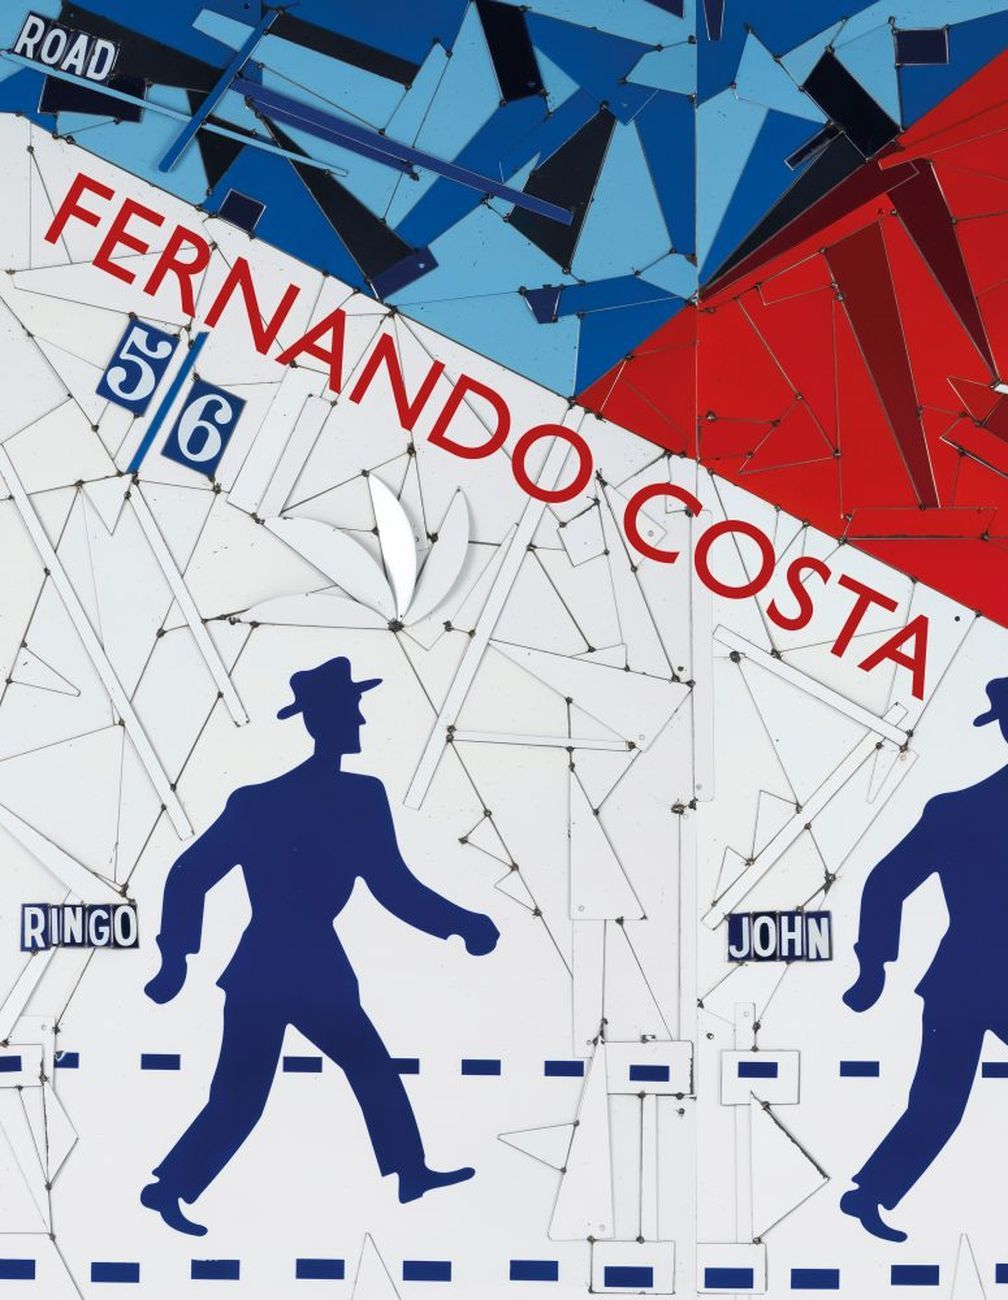 Fernando Costa (5 Continents, Milano 2018)